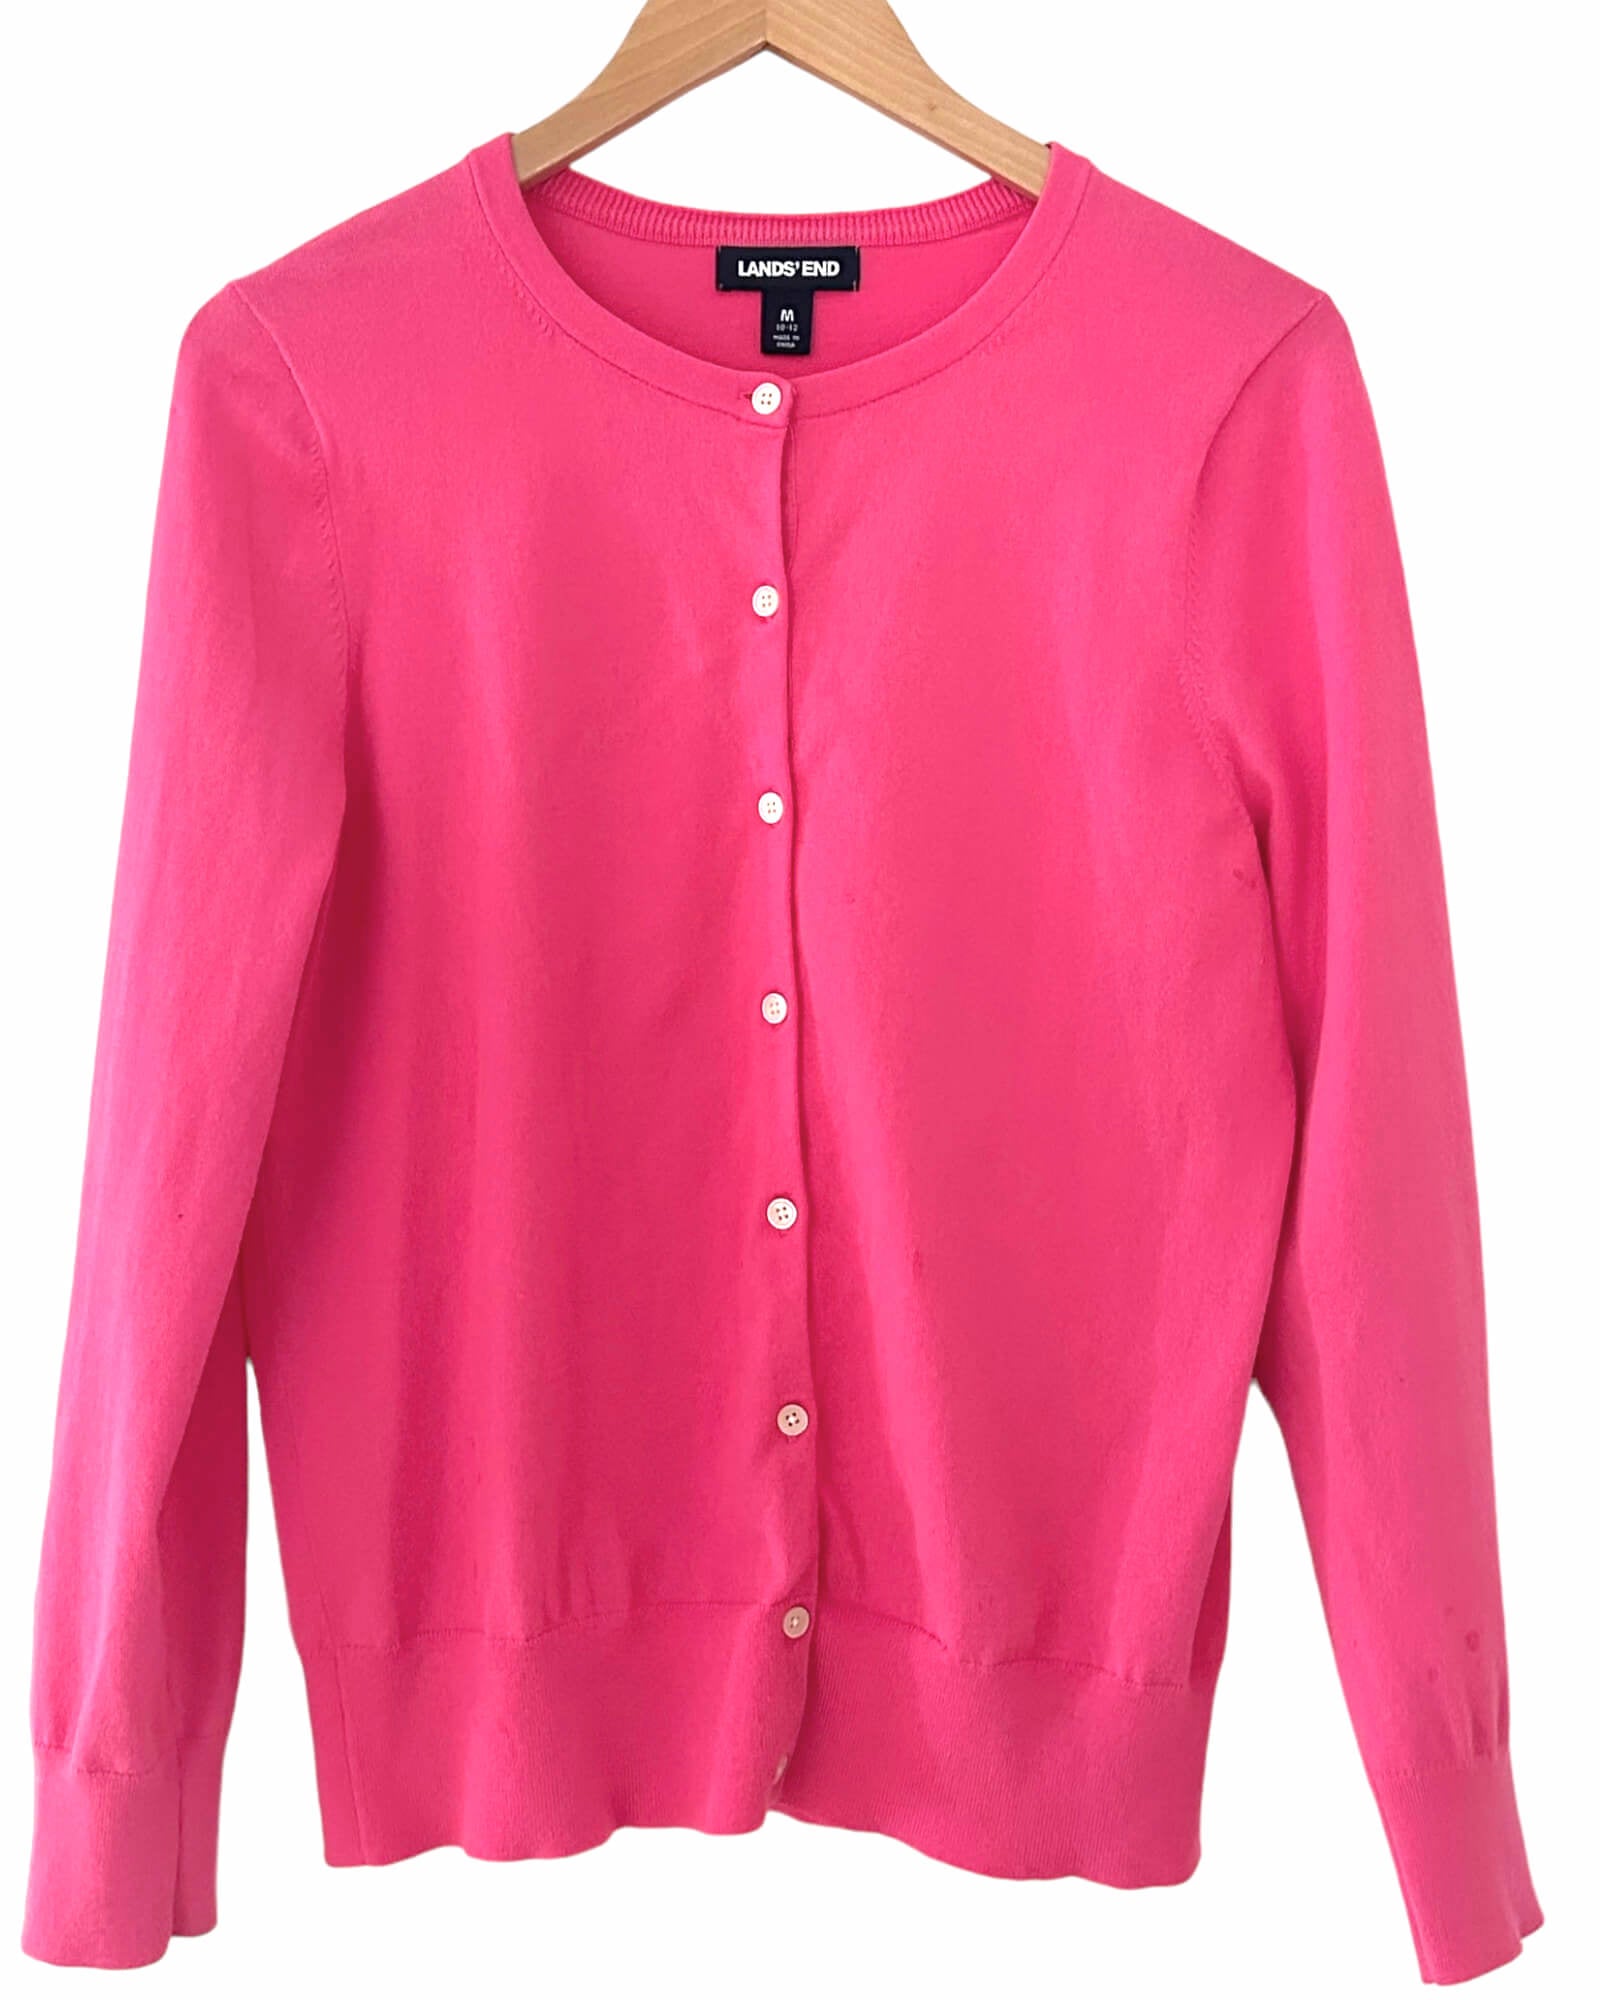 Light Summer LANDS END flamingo pink cardigan sweater